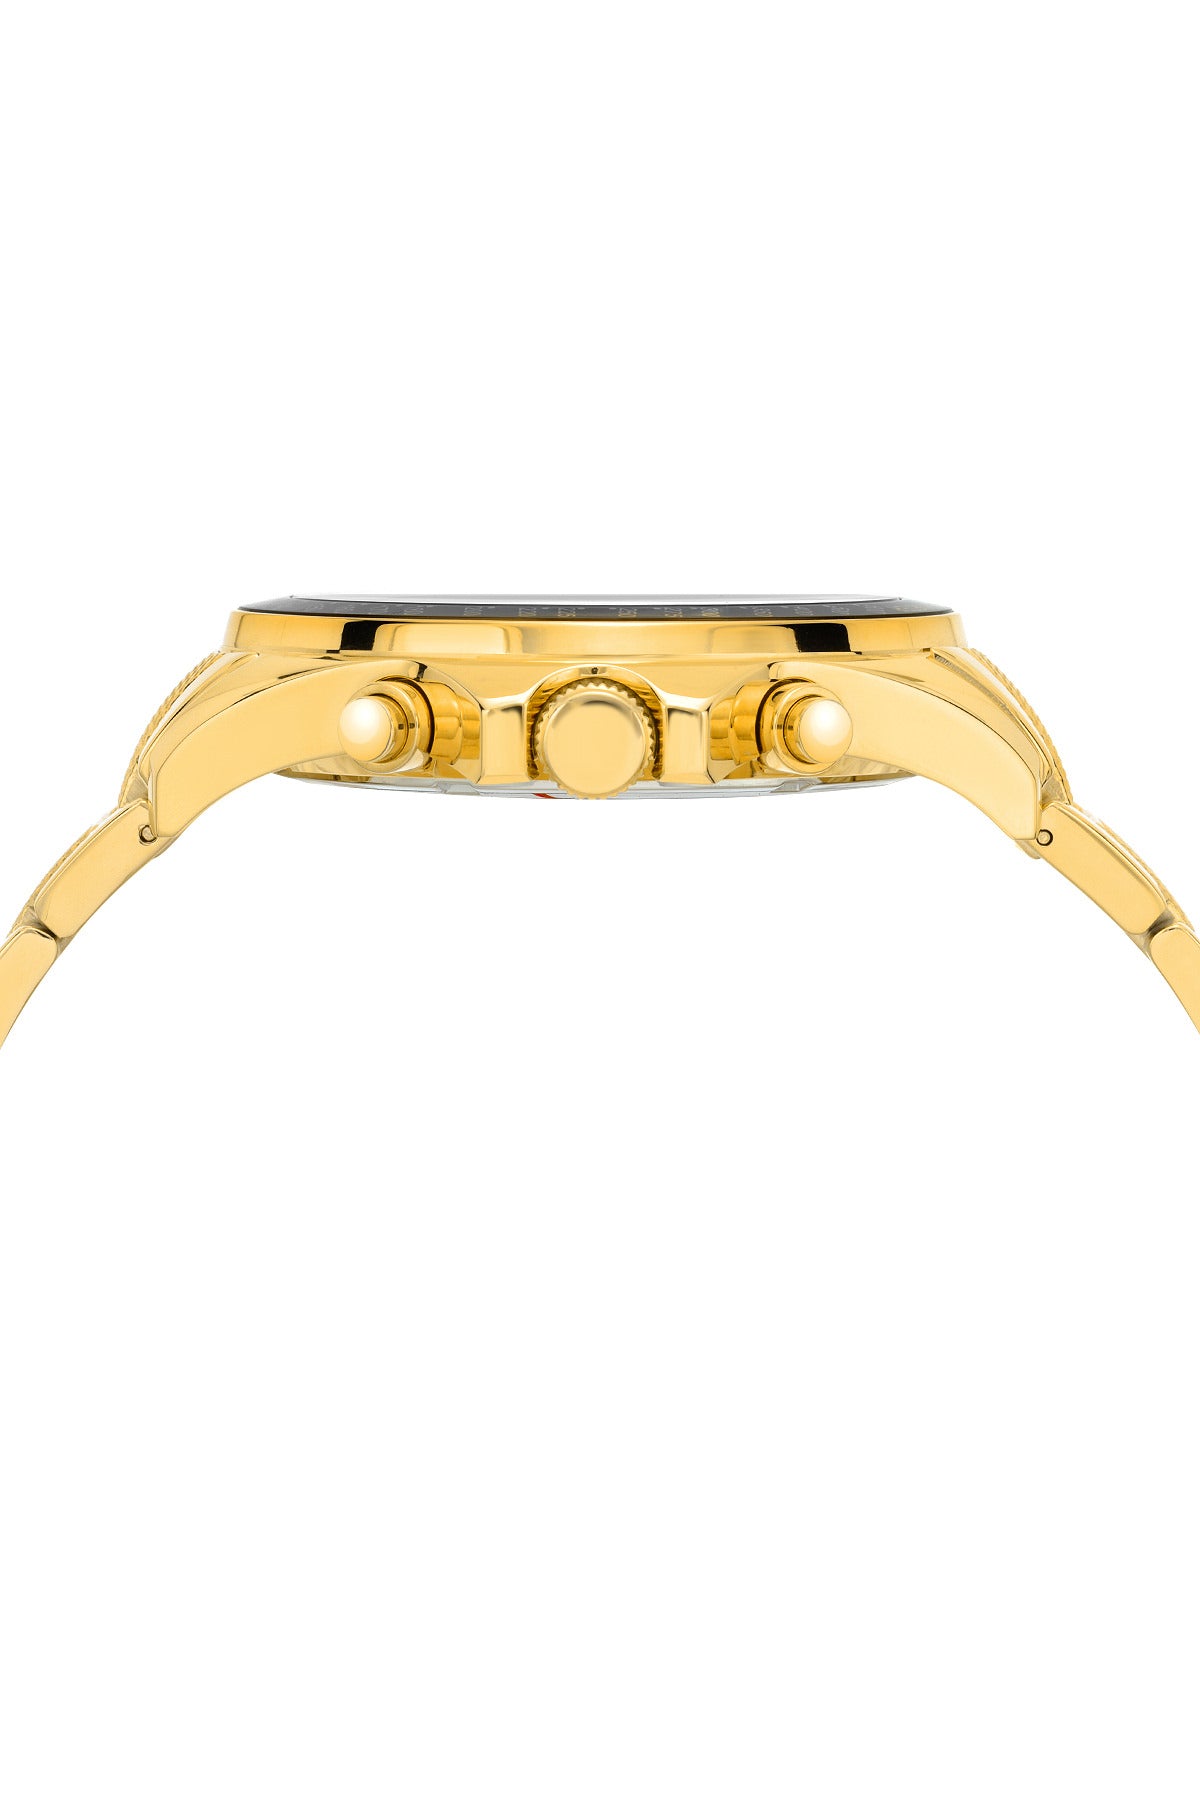 Porsamo Bleu Wolfgang luxury  chronograph men's stainless steel watch, gold 572BWOS